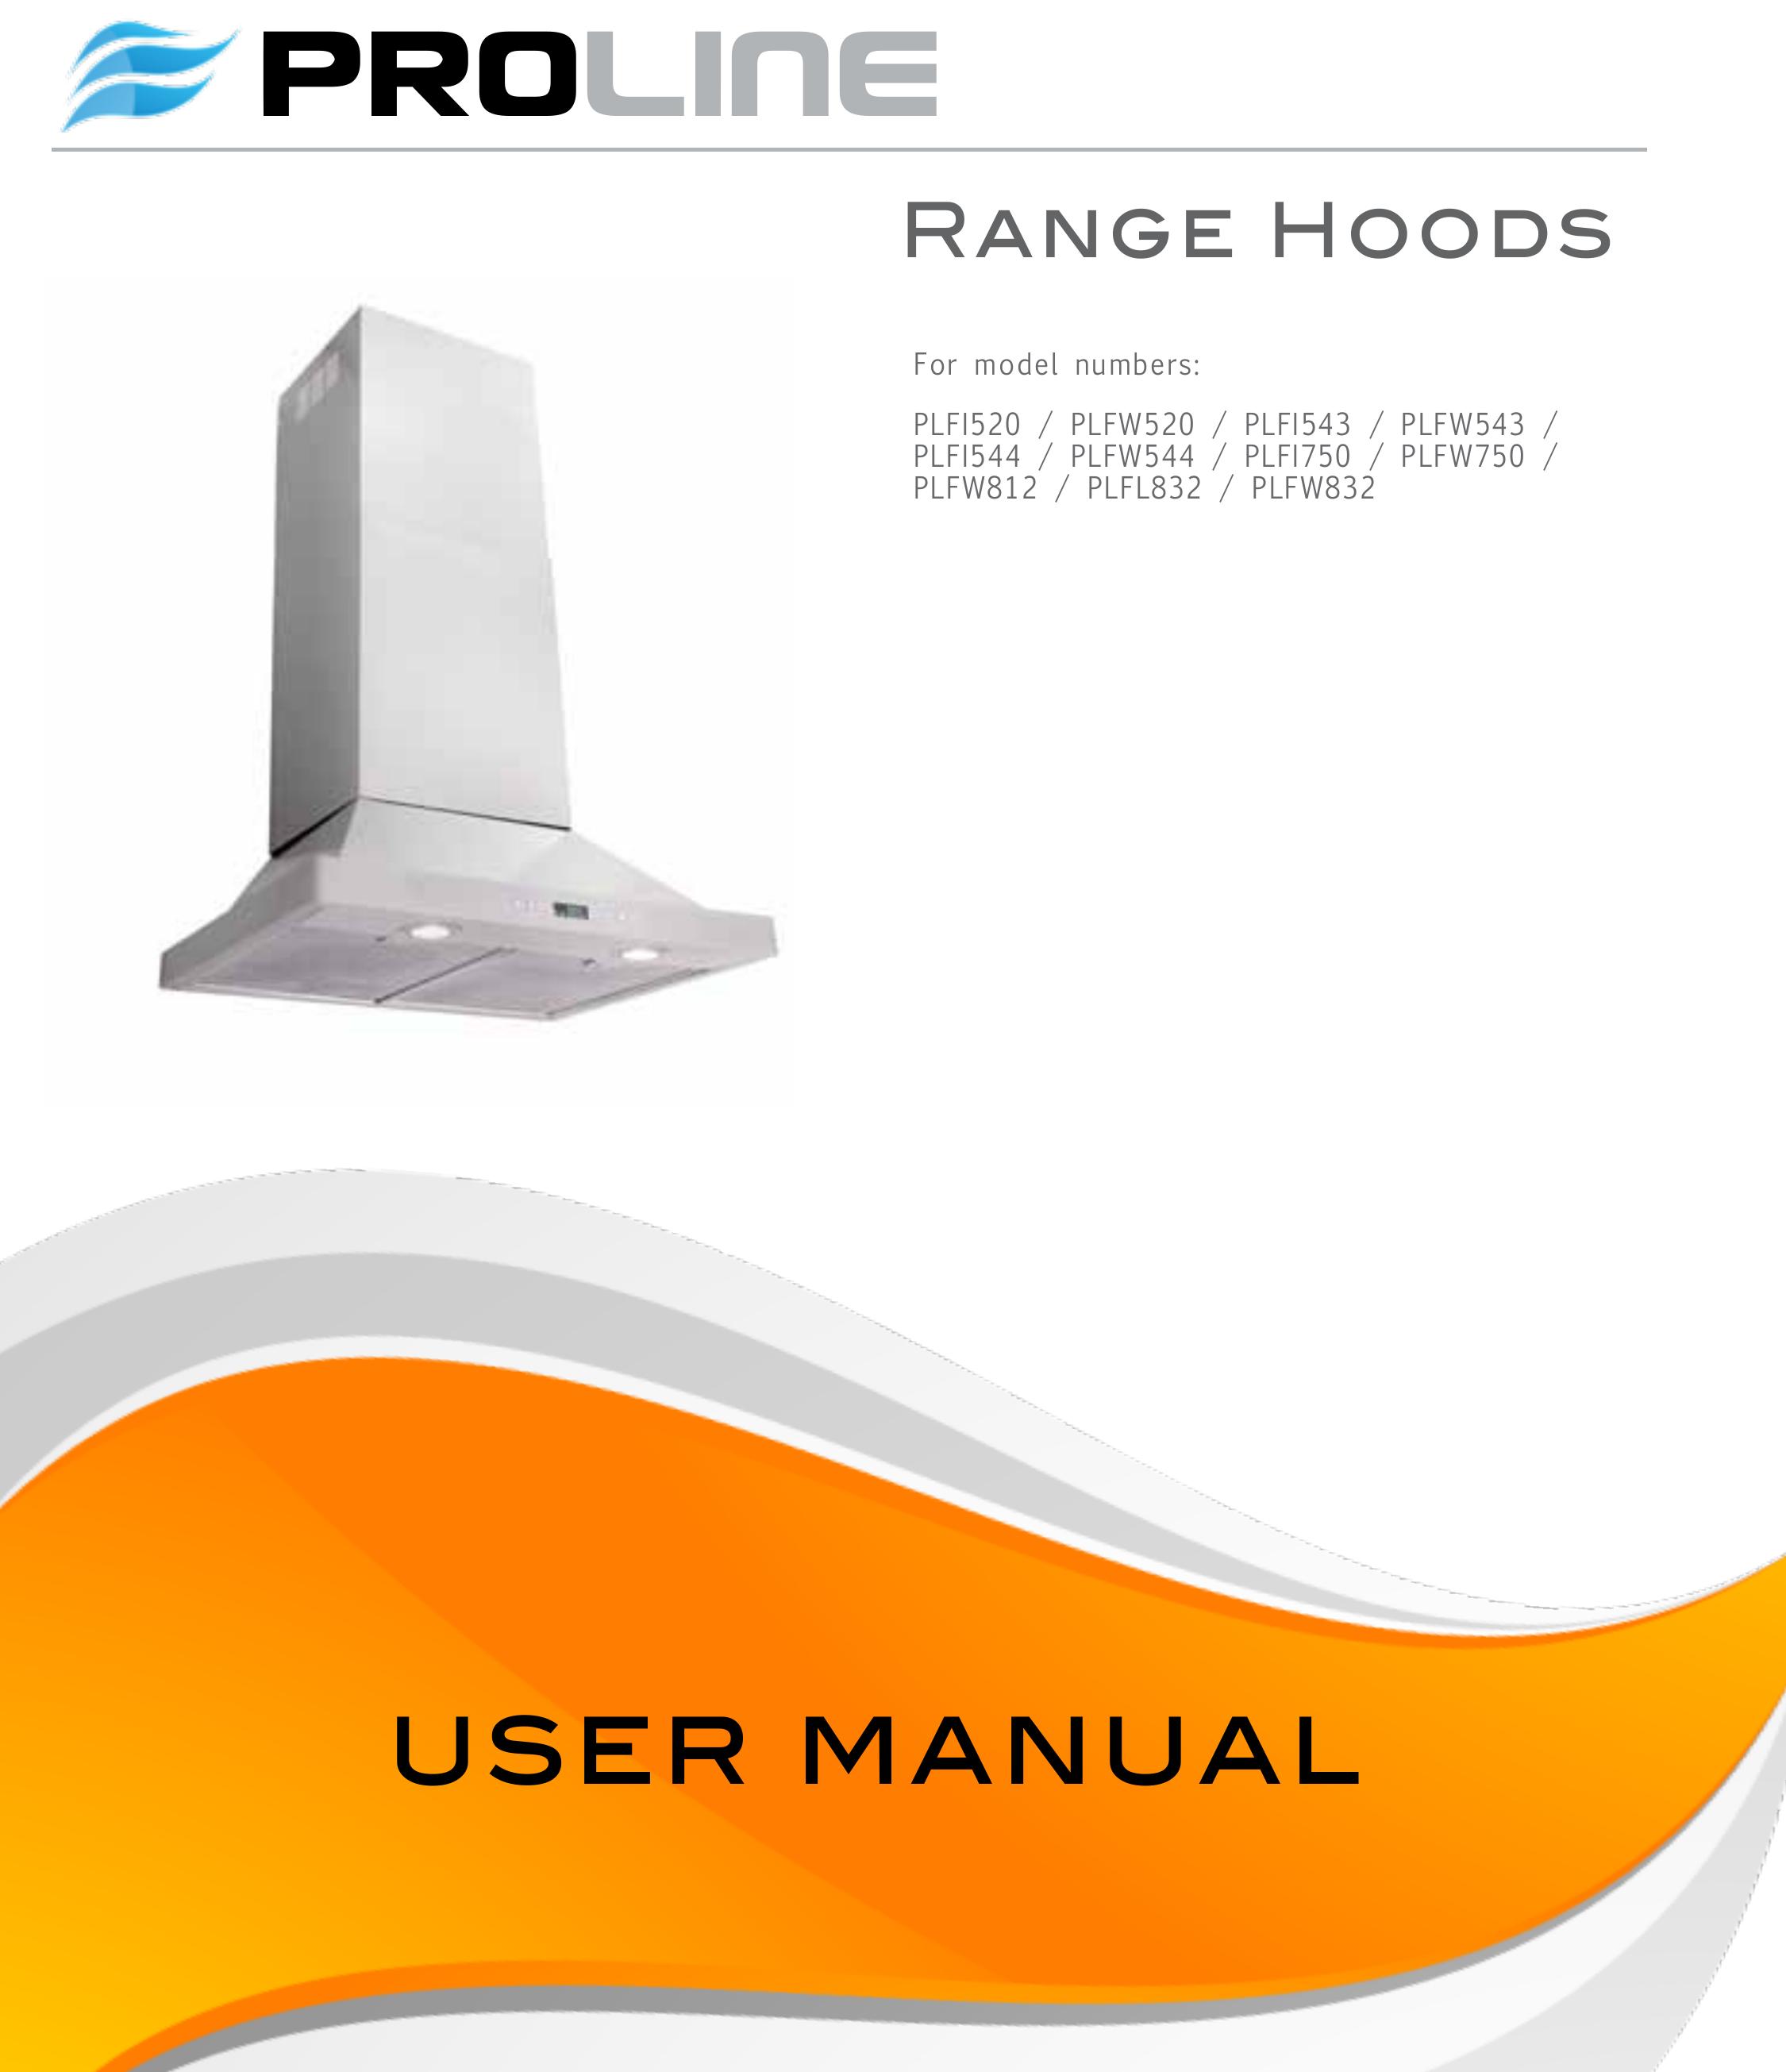 Proline PLFI543 Ventilation Hood User Manual